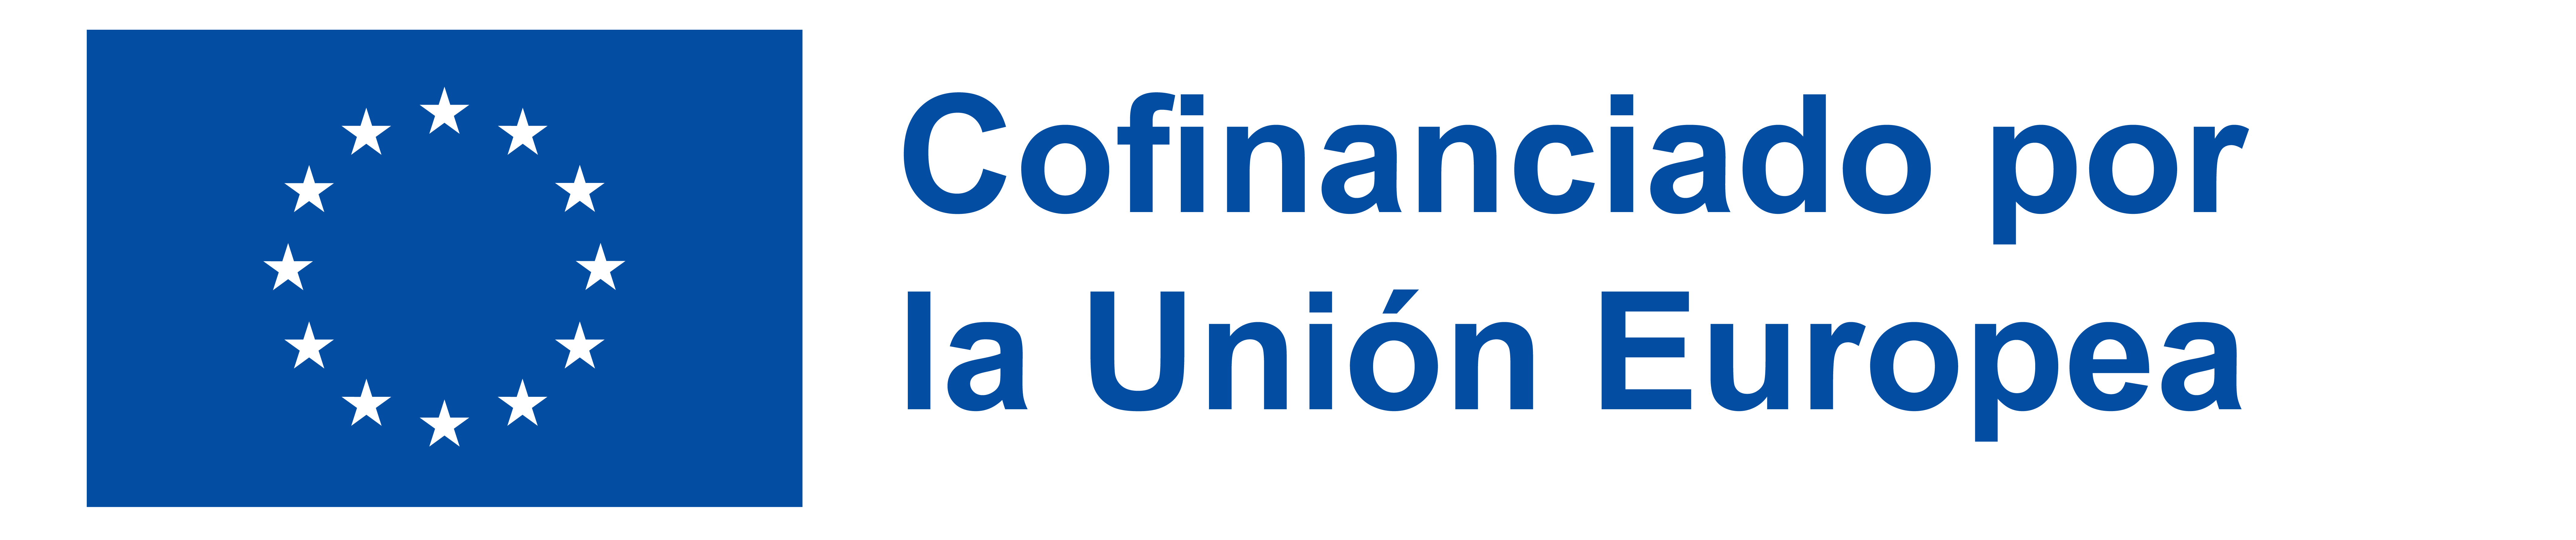 es_cofinanciado_por_la_union_europea_pantone